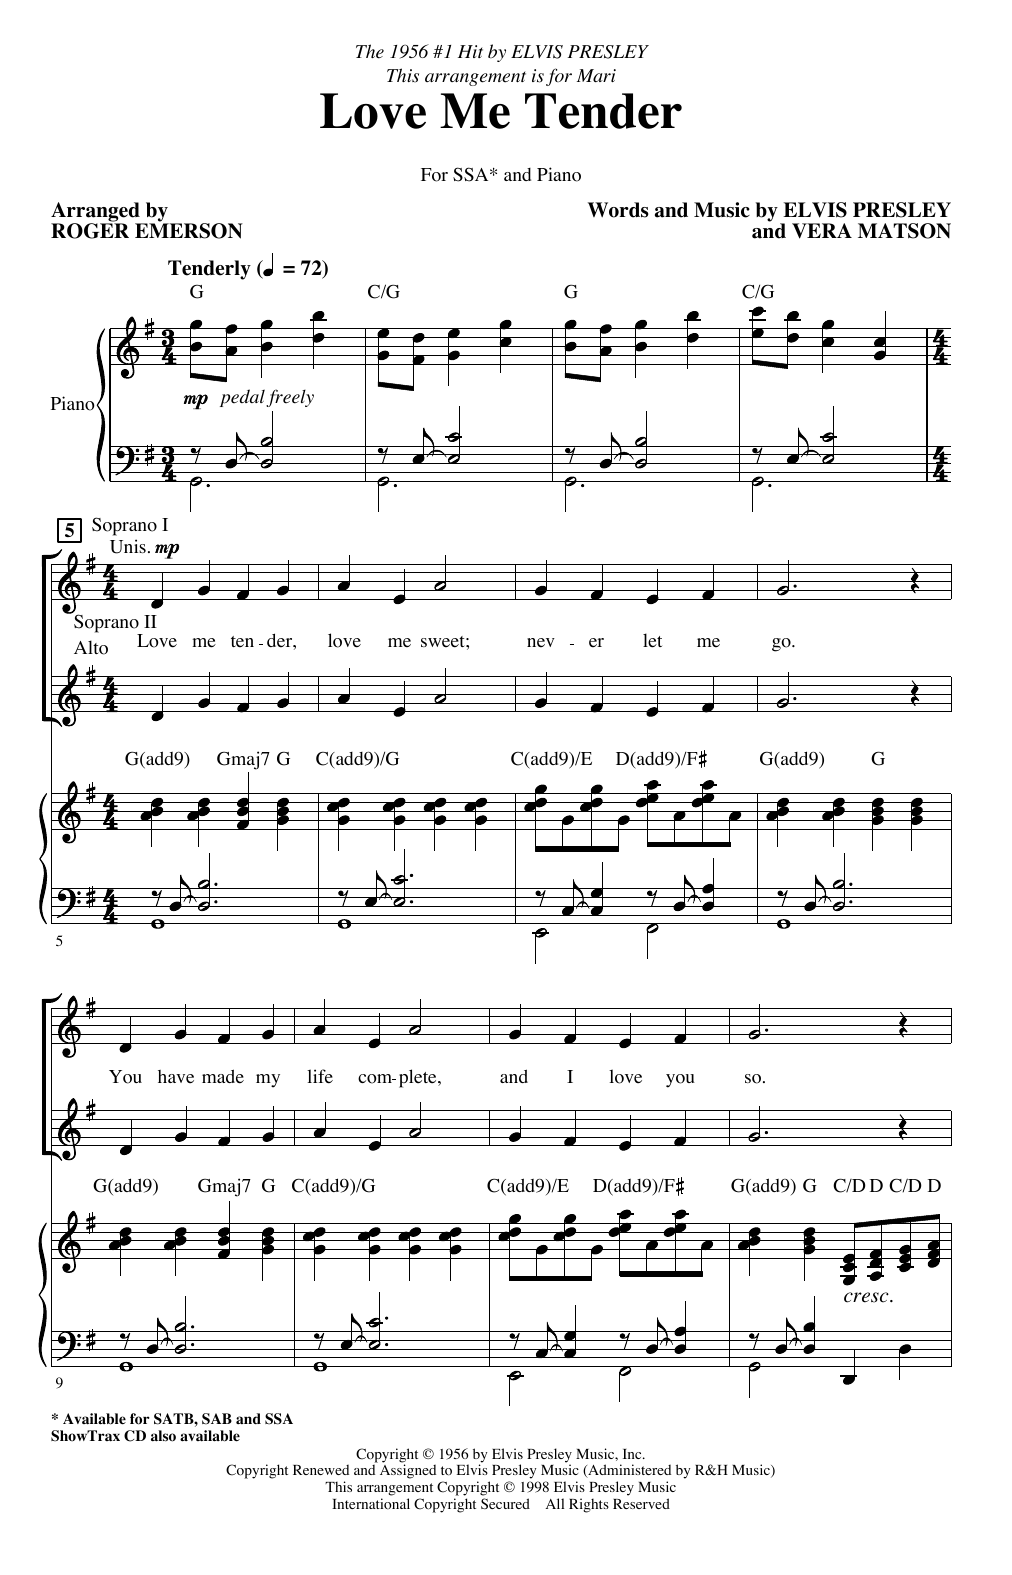 Elvis Presley Love Me Tender (arr. Roger Emerson) Sheet Music Notes & Chords for SSA Choir - Download or Print PDF